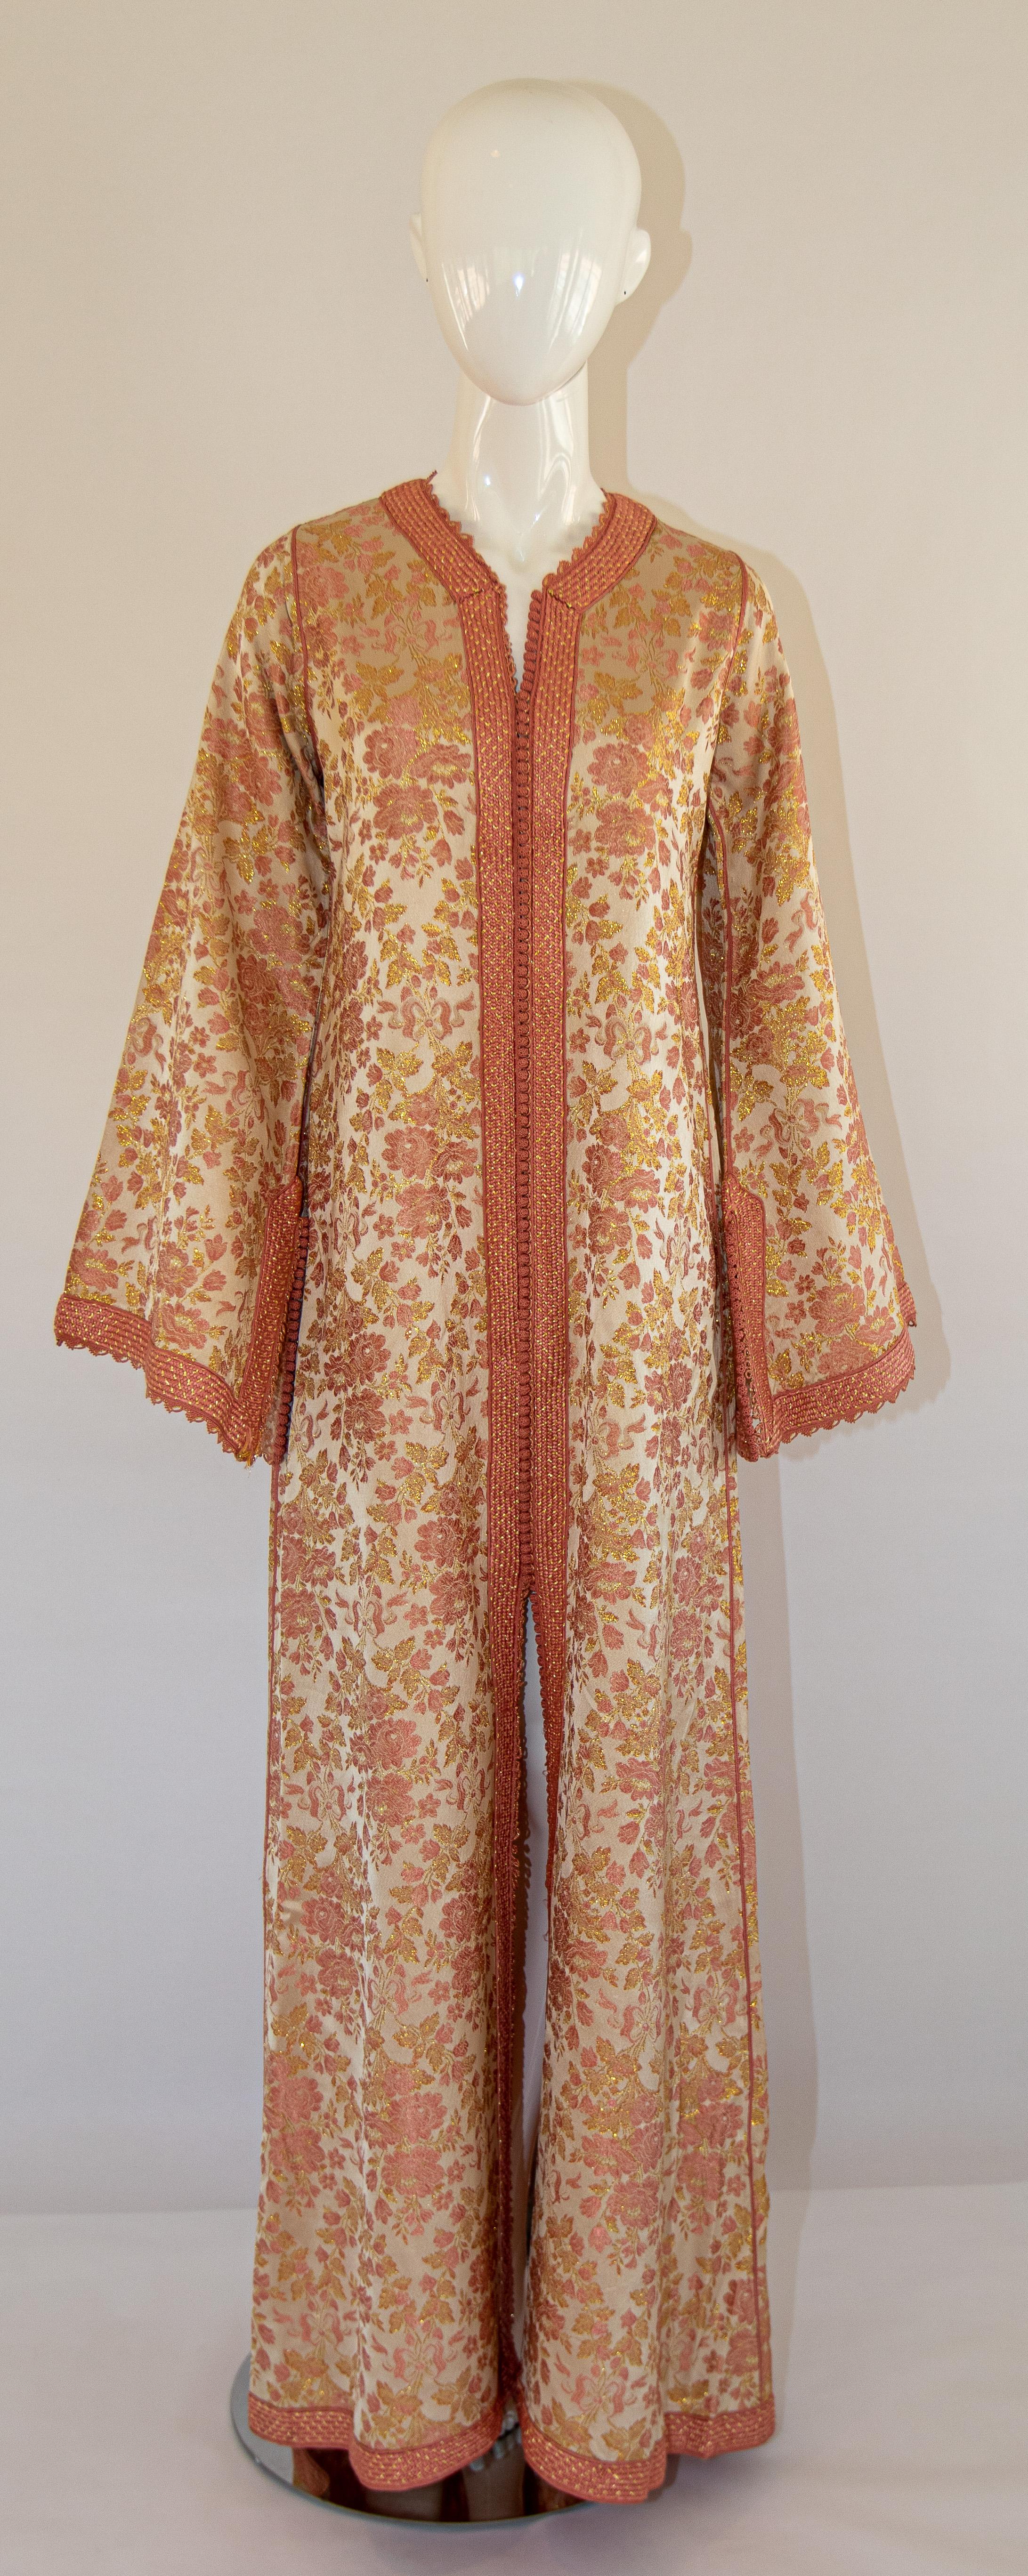 Moroccan Caftan, Blush Pink and Gold Brocade Vintage Kaftan Size Medium 13